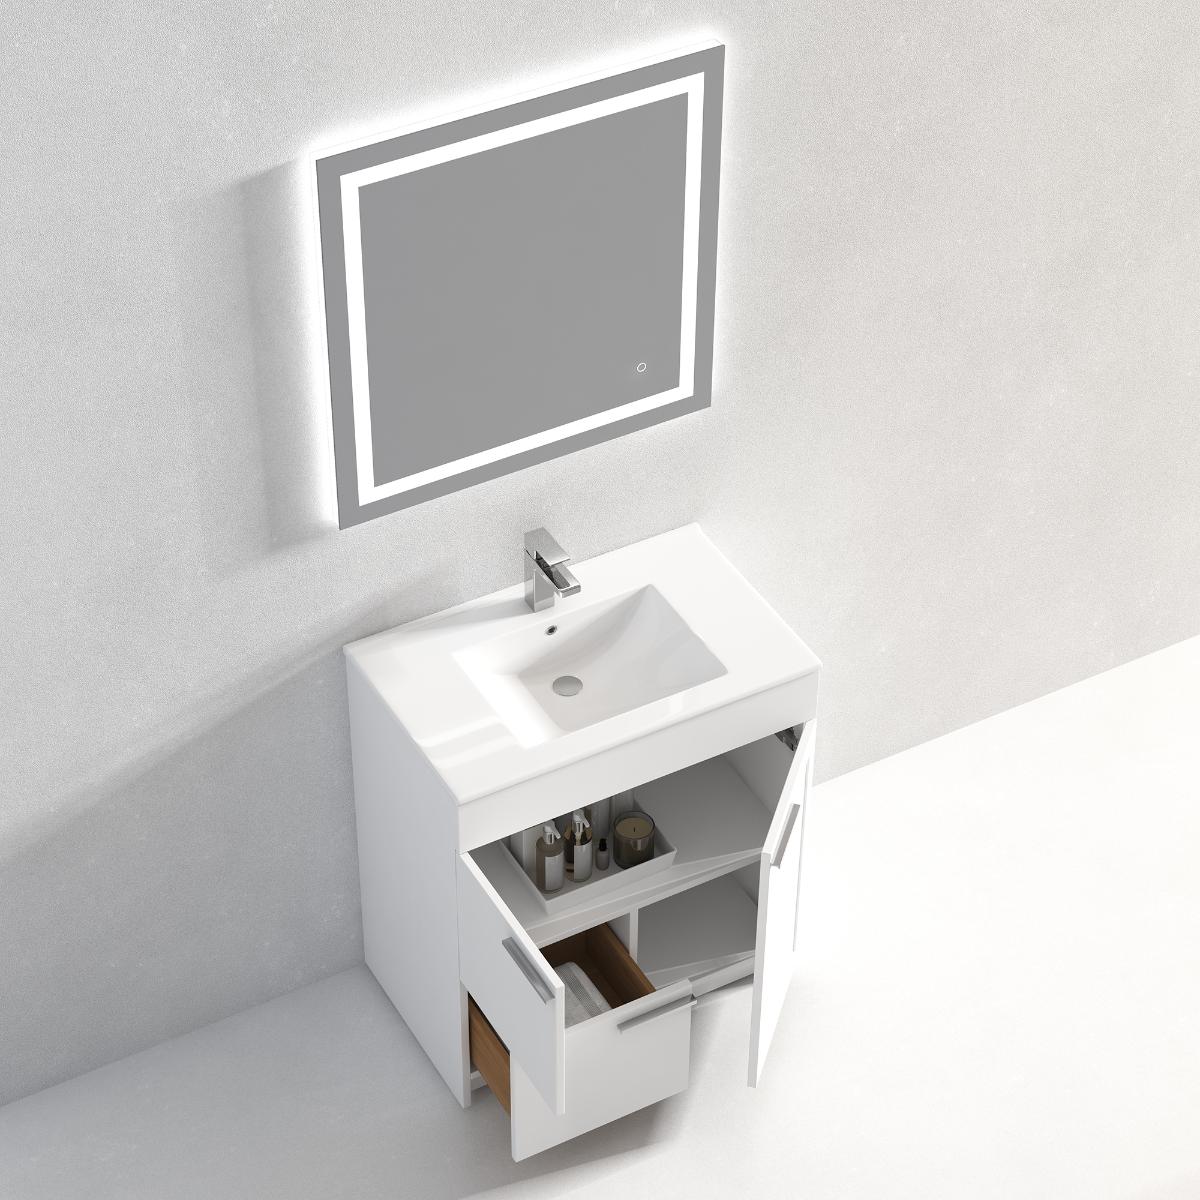 Hanover 30″ Free-Standing Vanity with Ceramic Top - Contemporary Bathroom Vanity